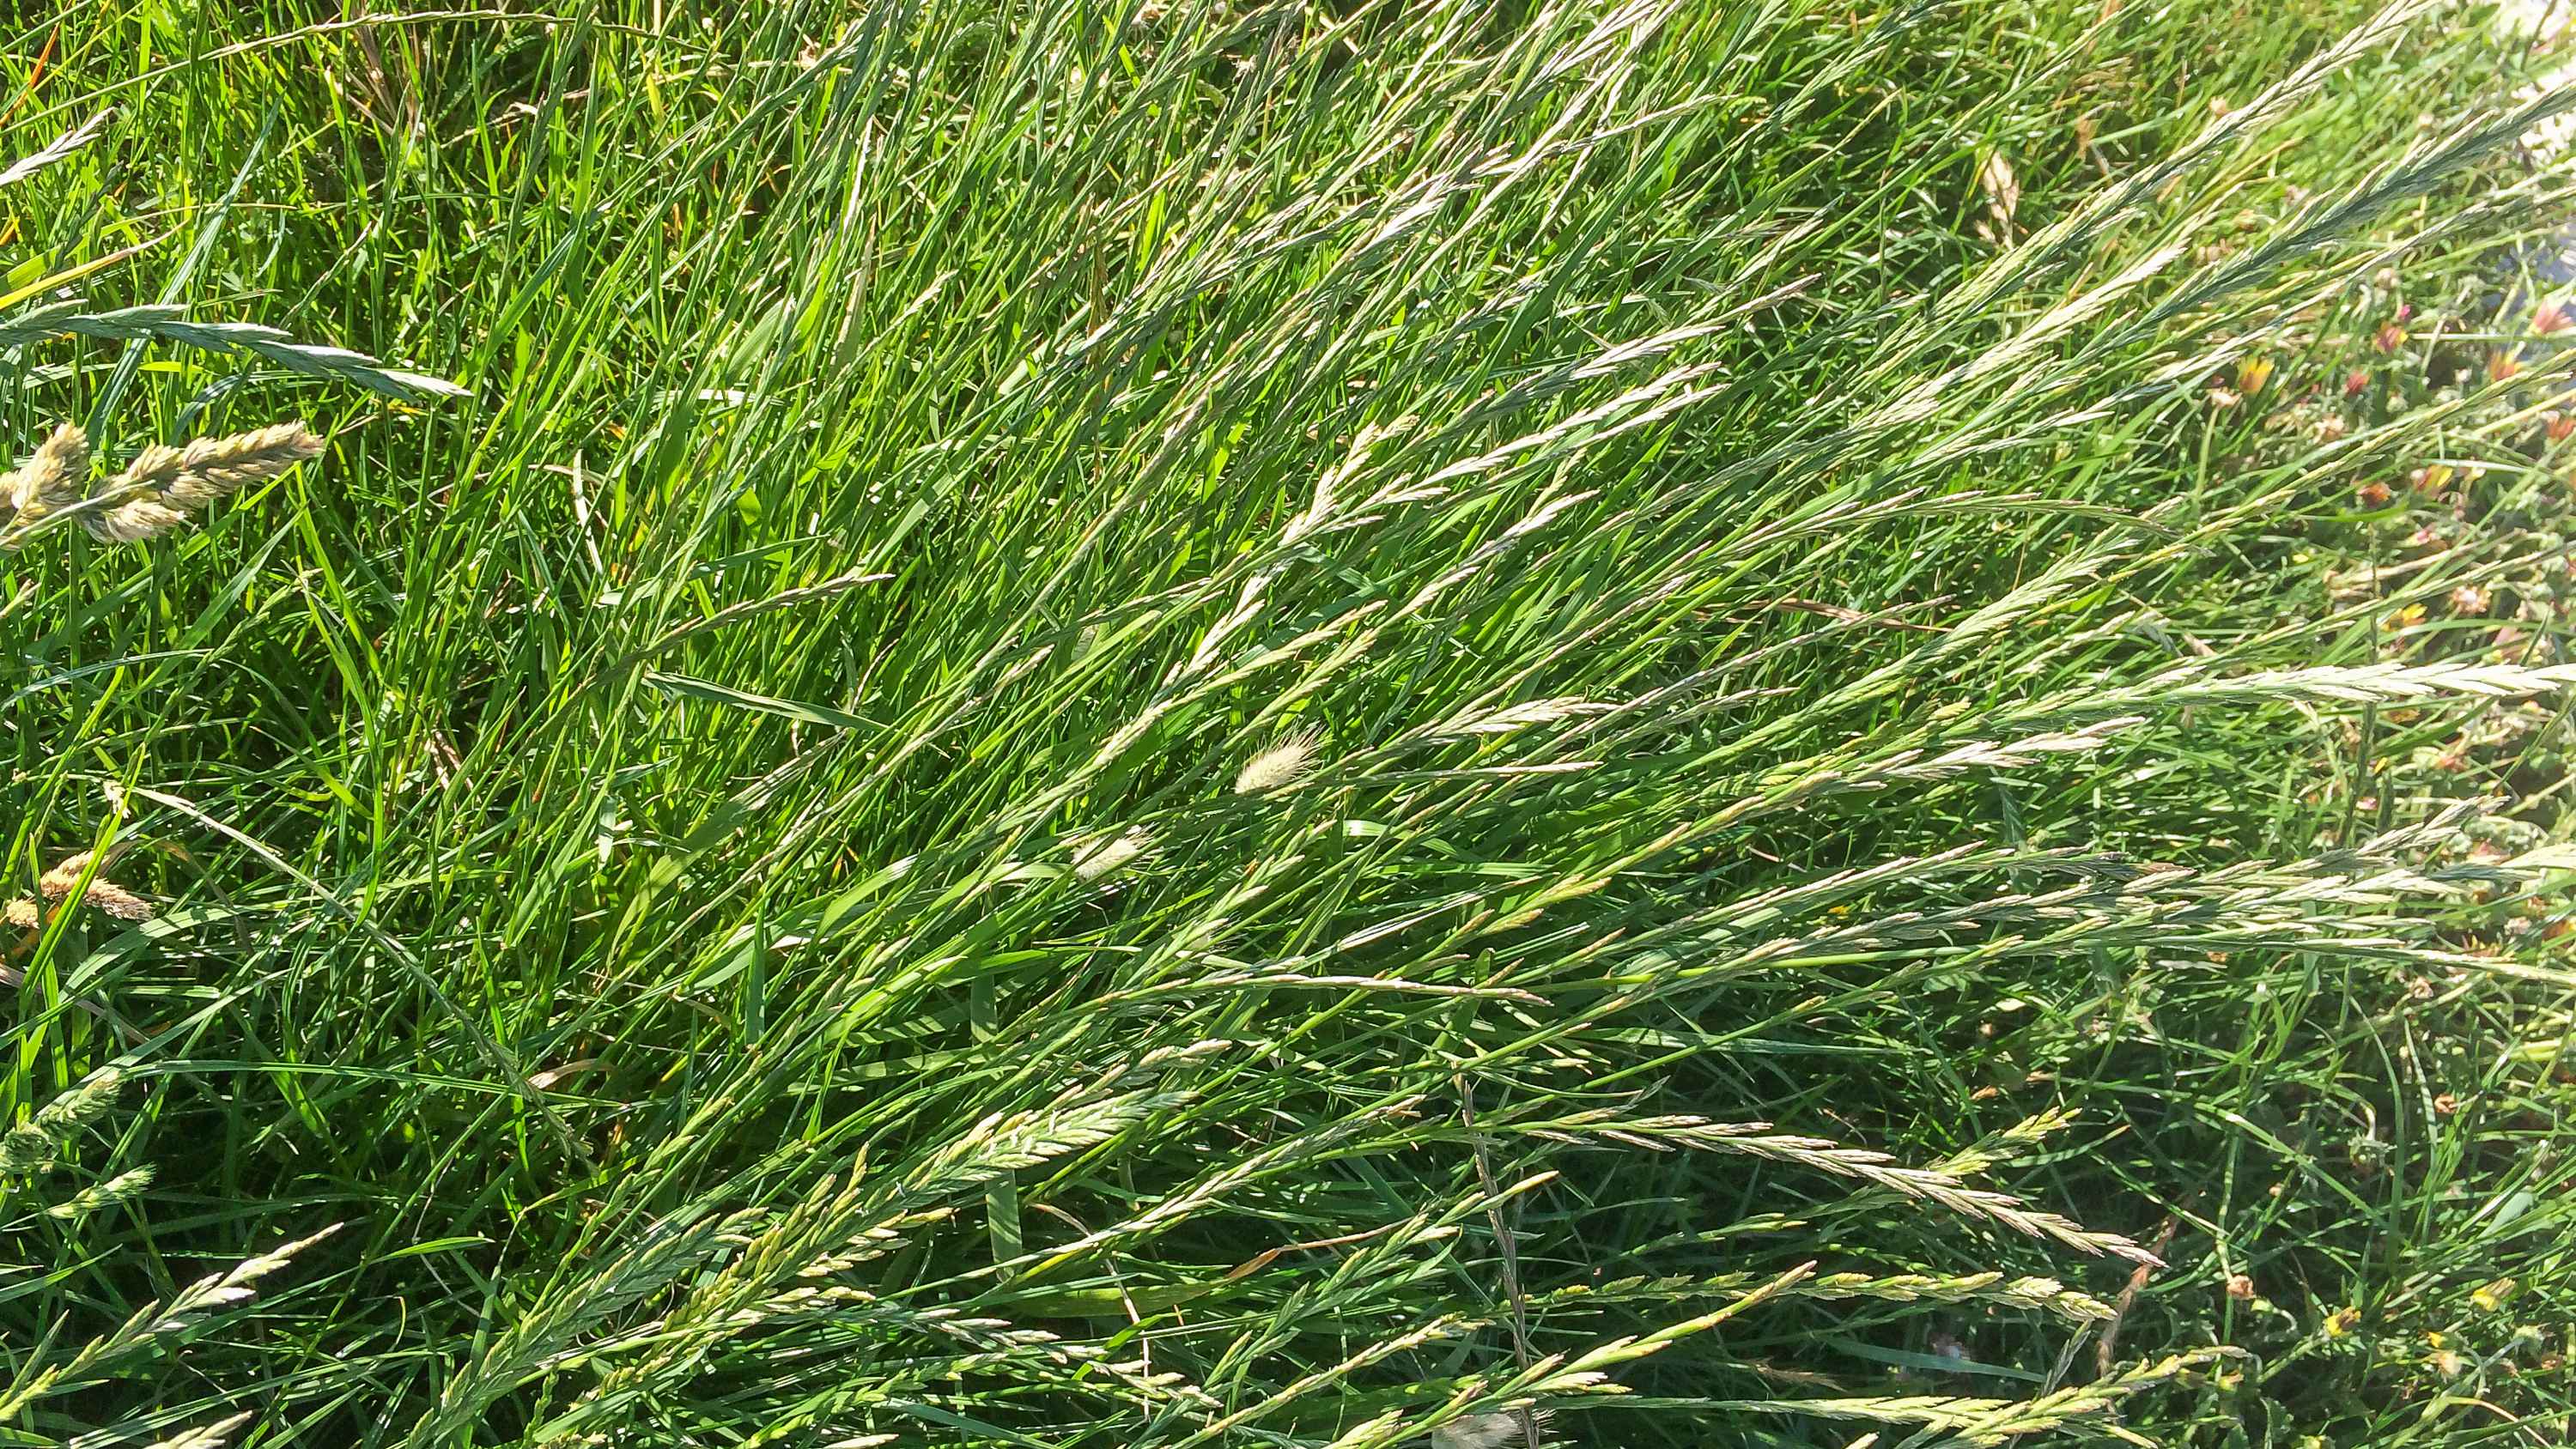 Green rye grass growing in a paddock. Image: arousa / iStock.